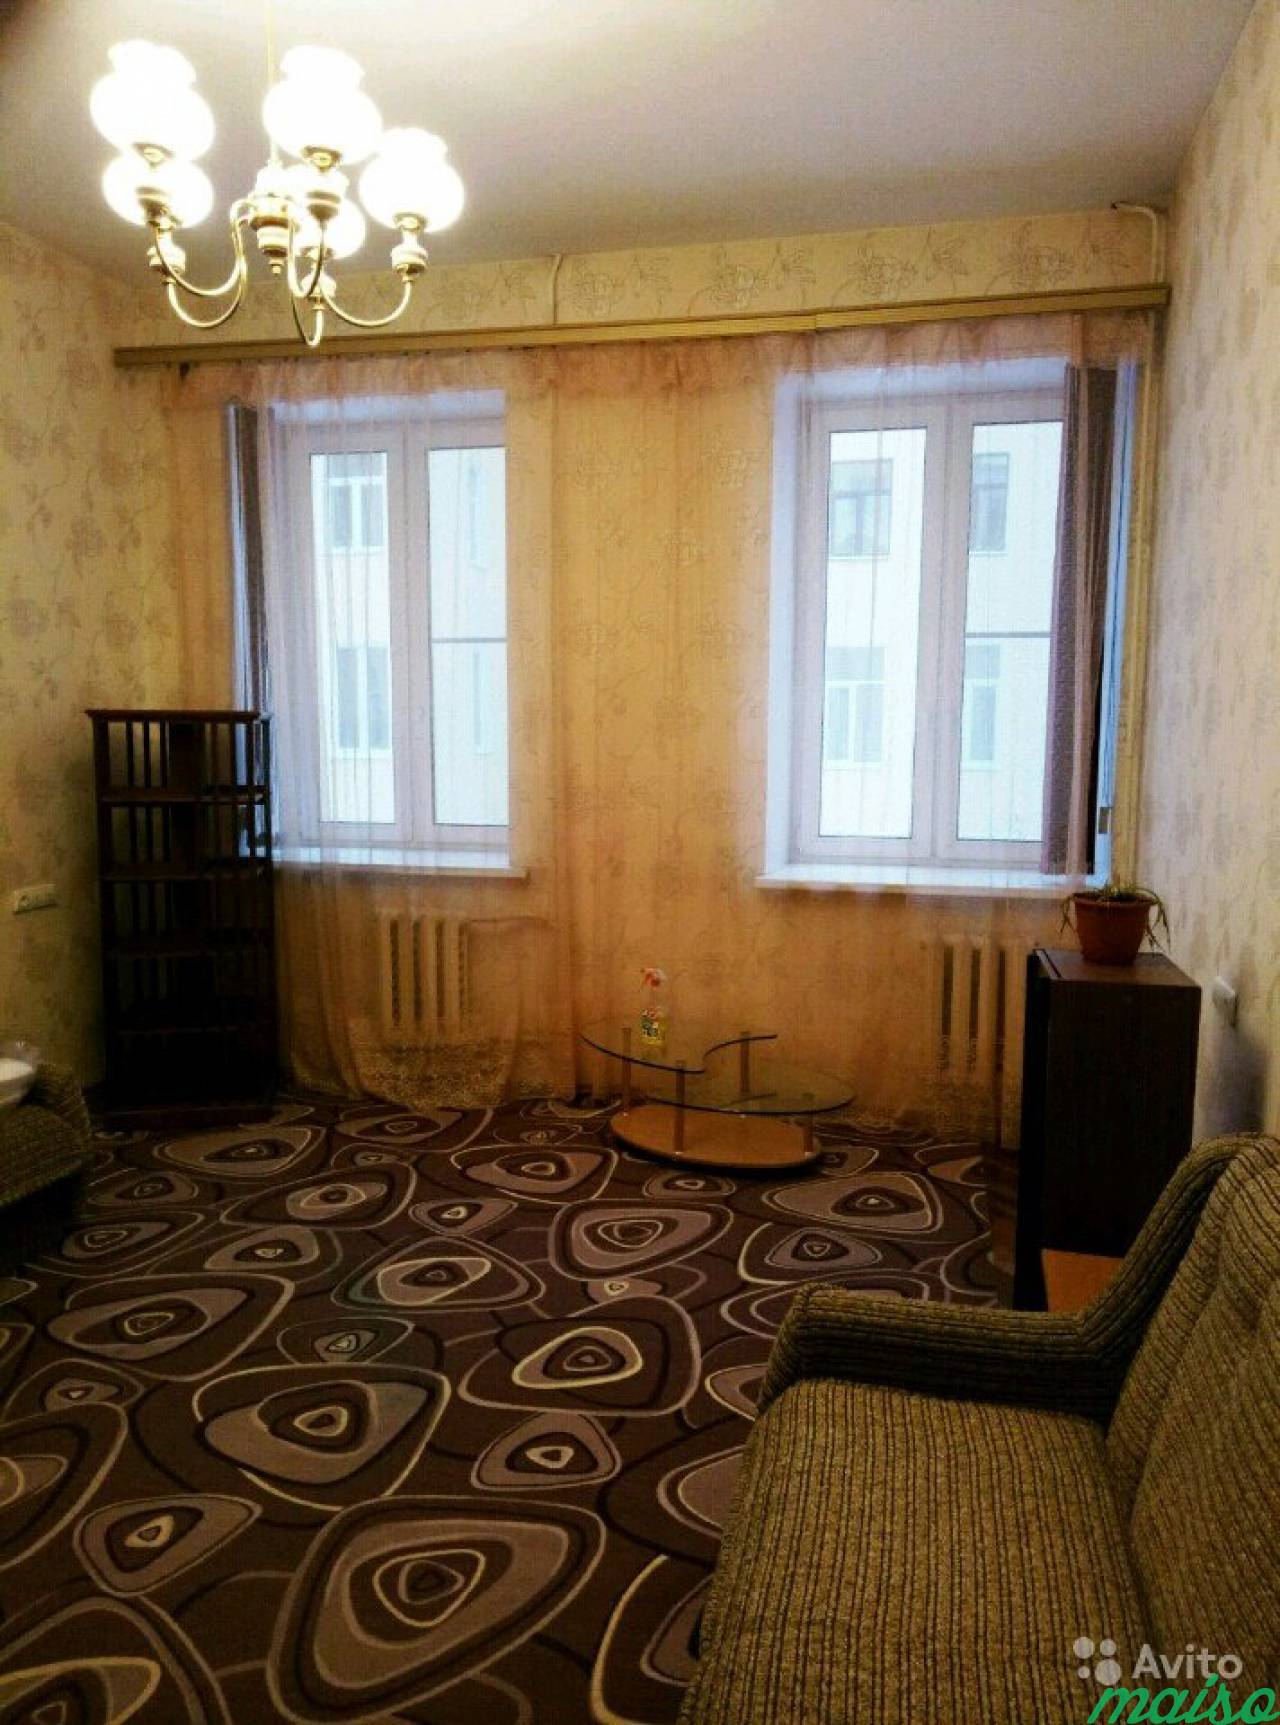 Комната 20 м² в 3-к, 2/5 эт. в Санкт-Петербурге. Фото 3